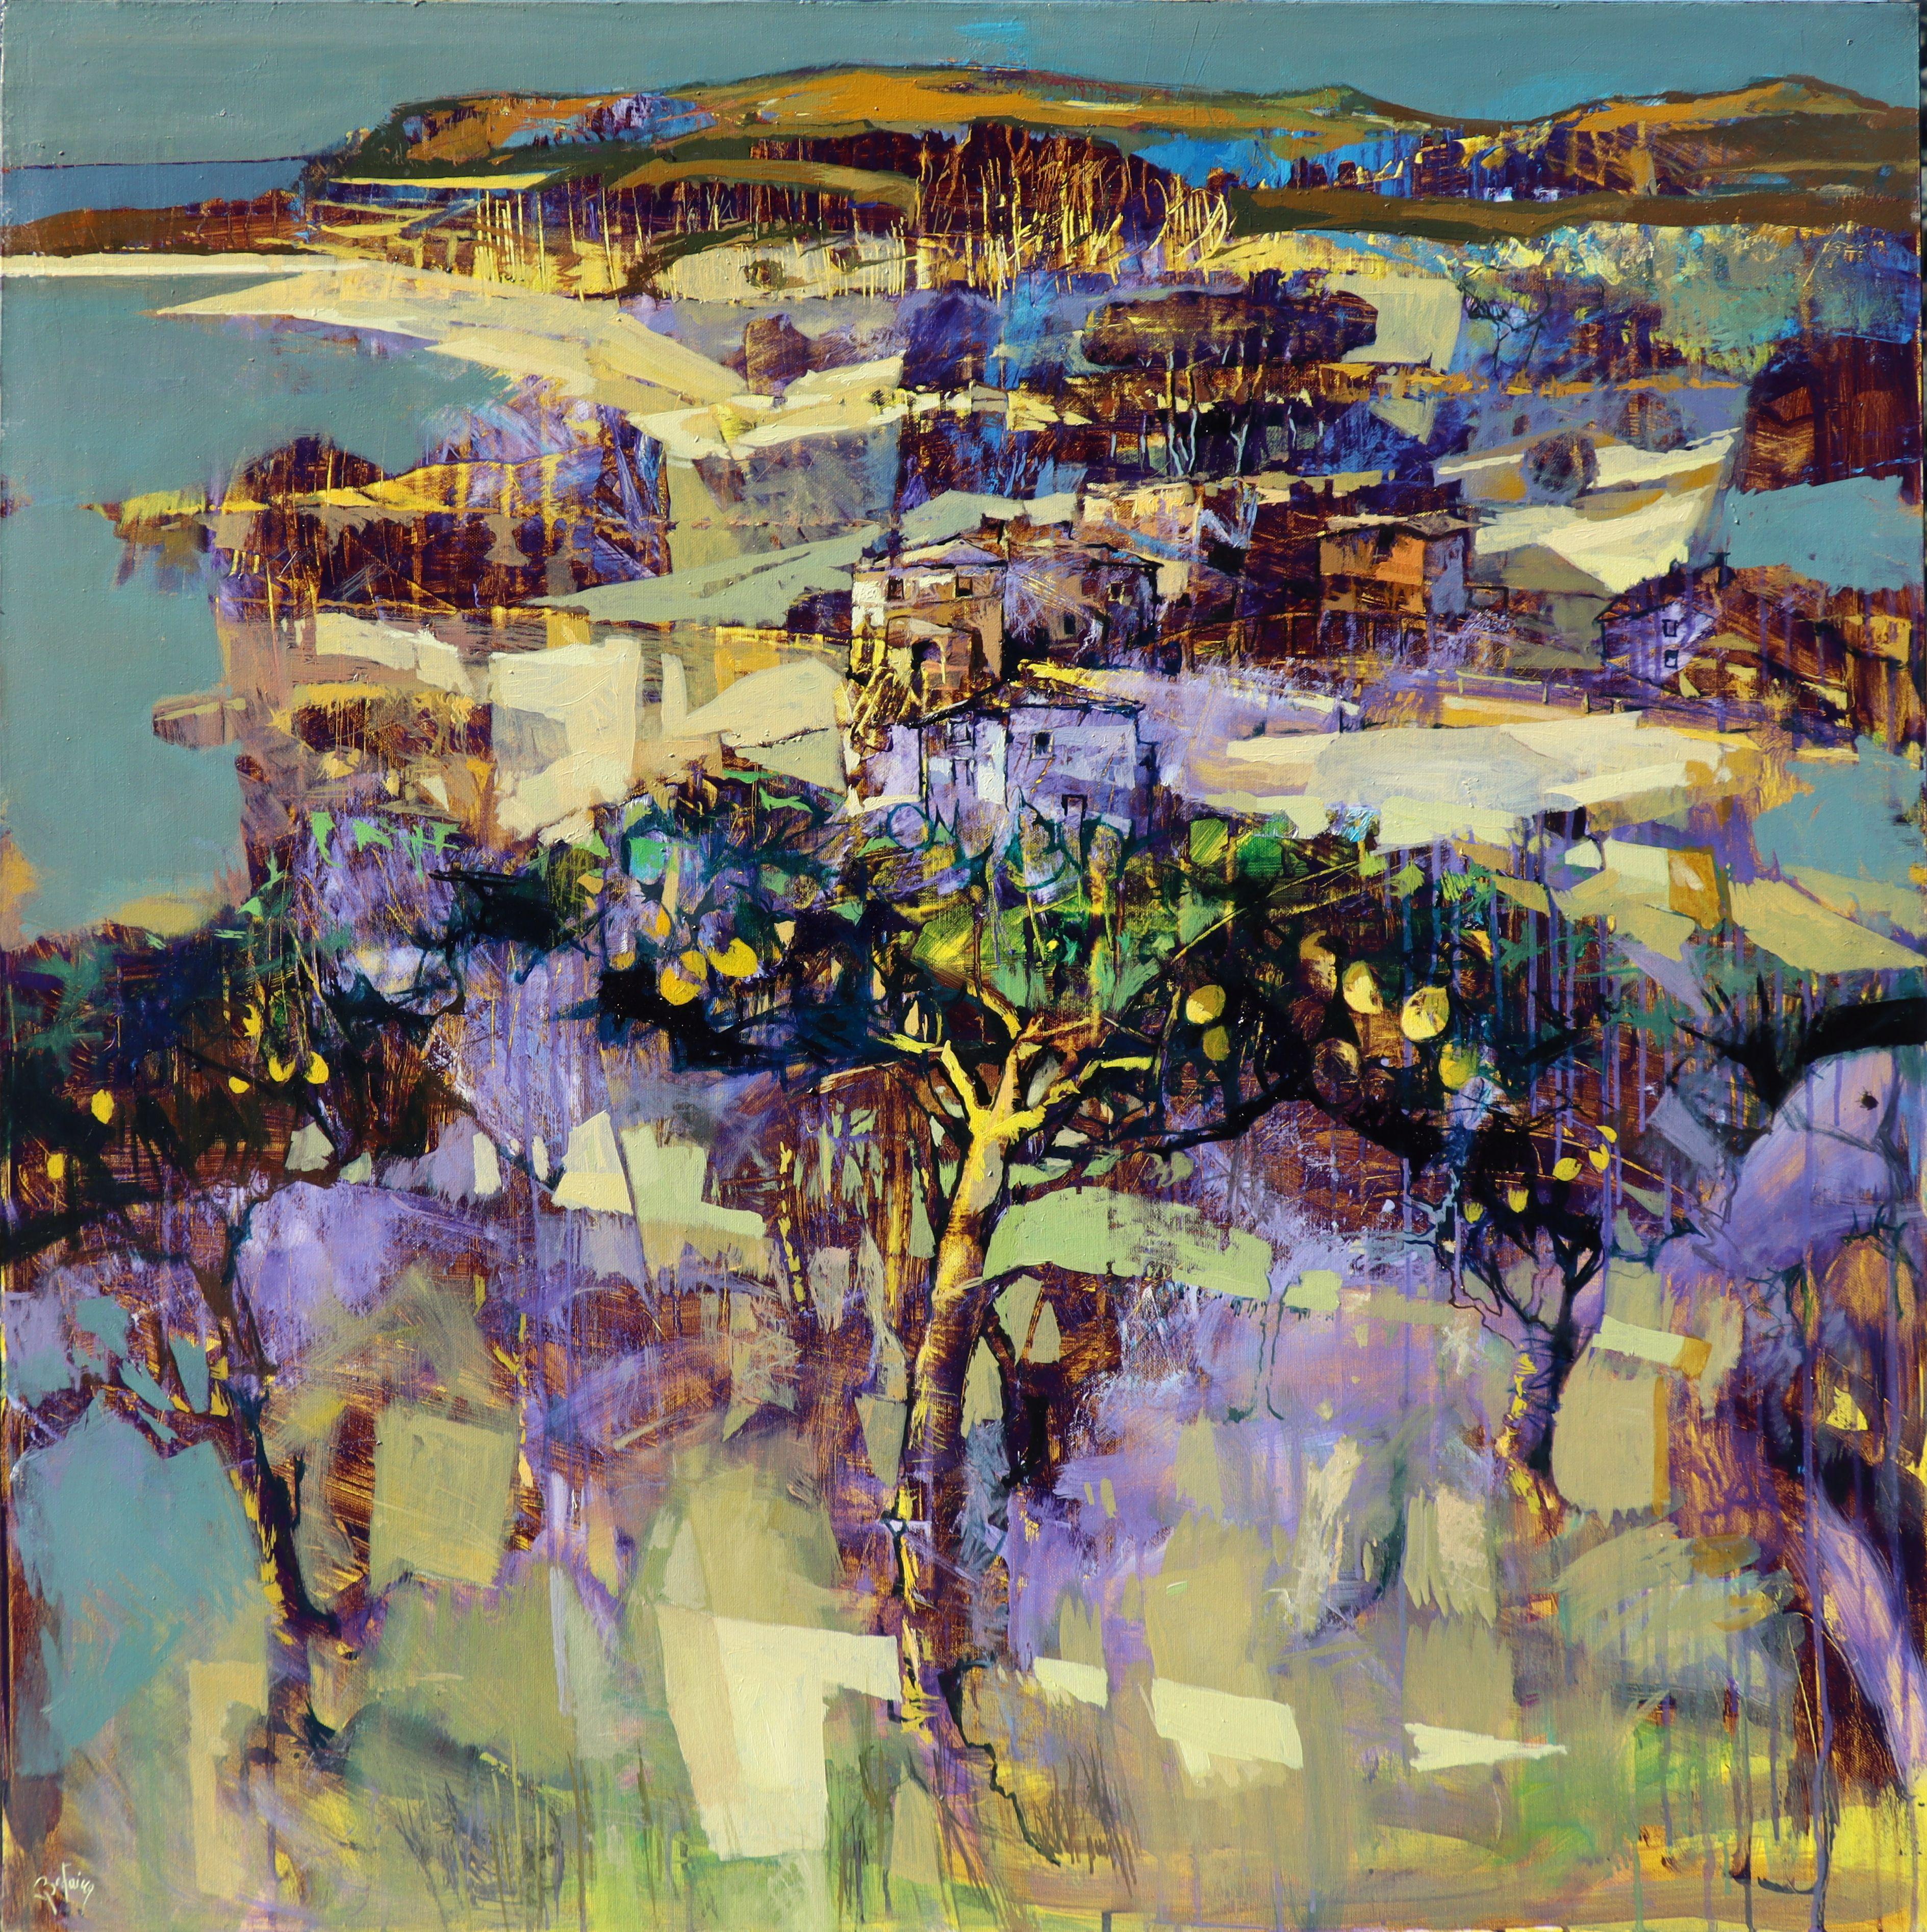 Le meilleur moment - contemporary Italian Tuscany landscape violet lemon trees  - Painting by Alex Bertaina